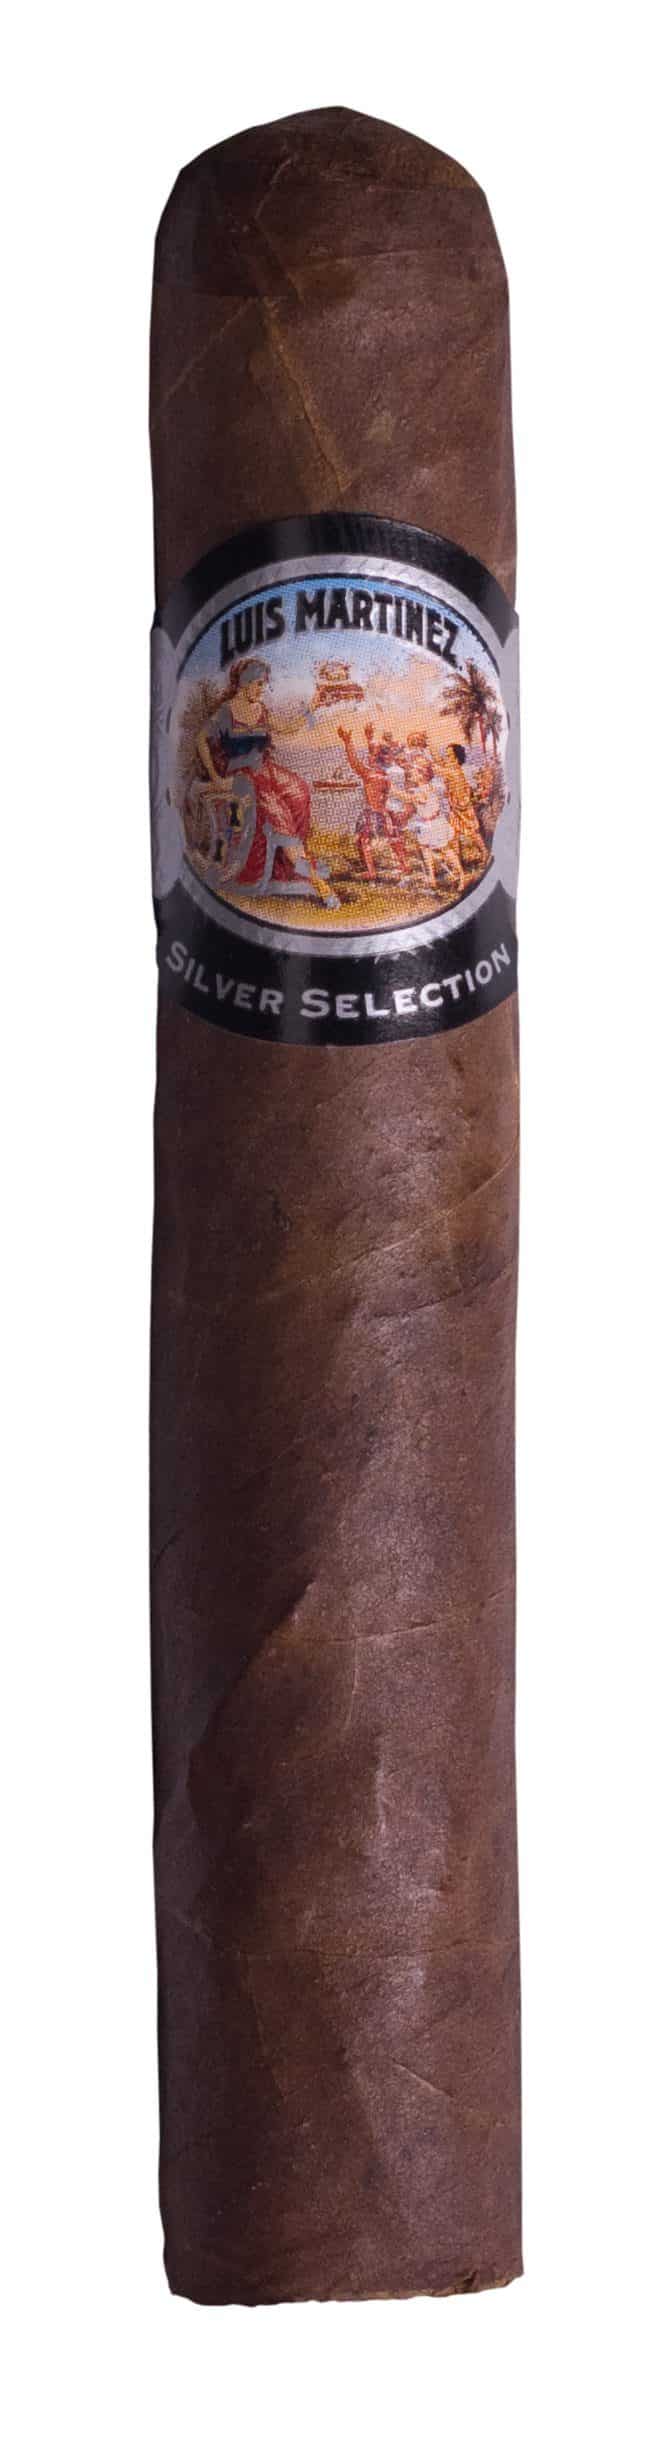 luis martinez silver collection robusto single cigar